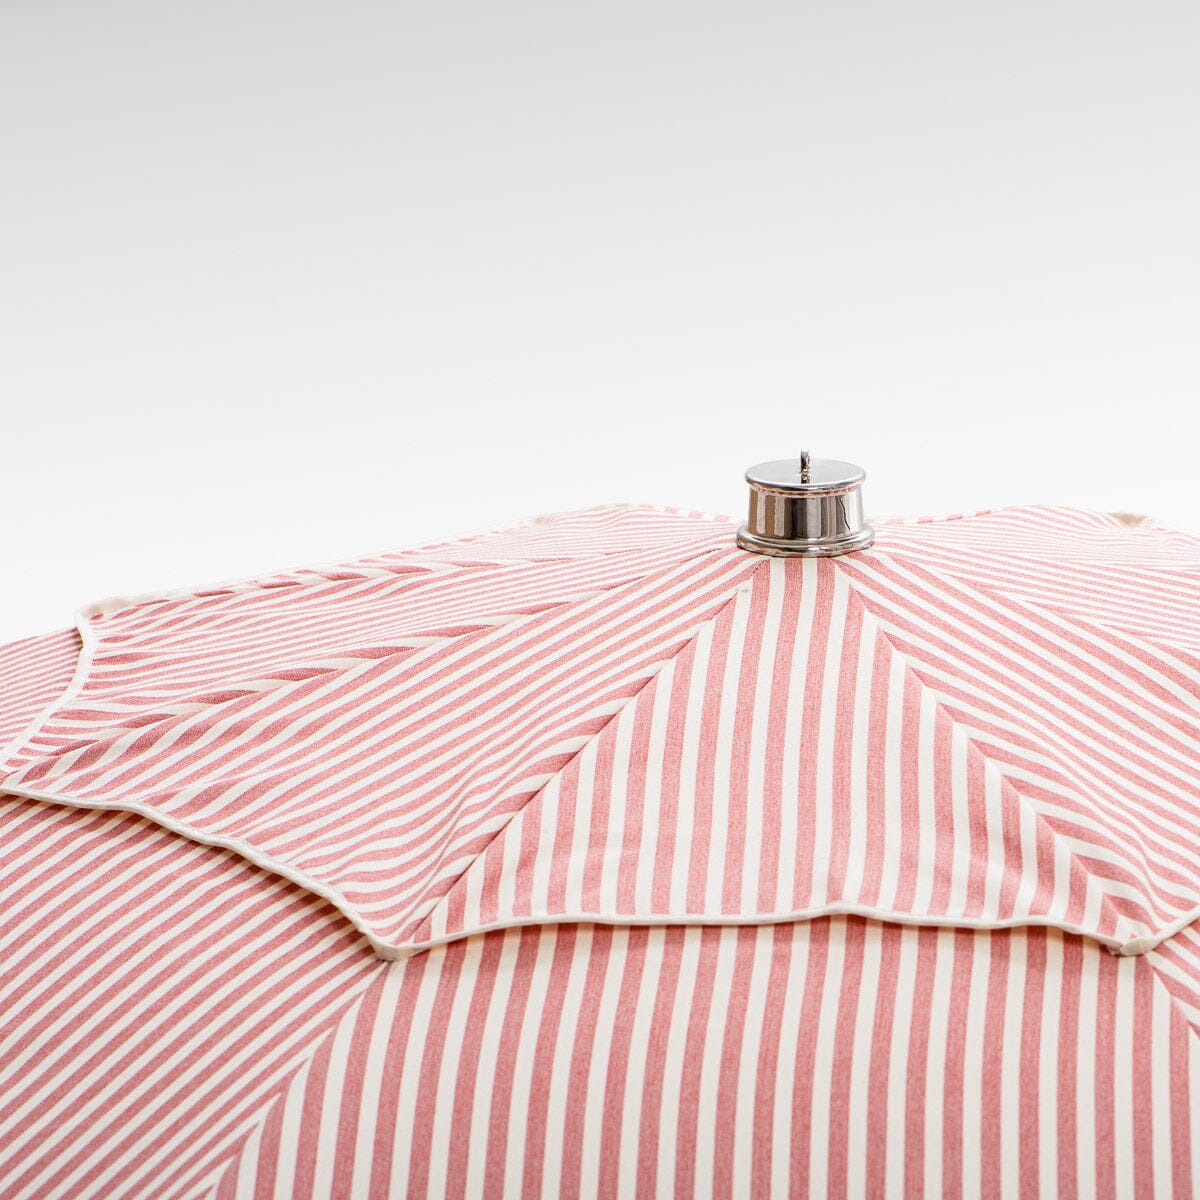 chrome top cap detail on pink stripe patio umbrella